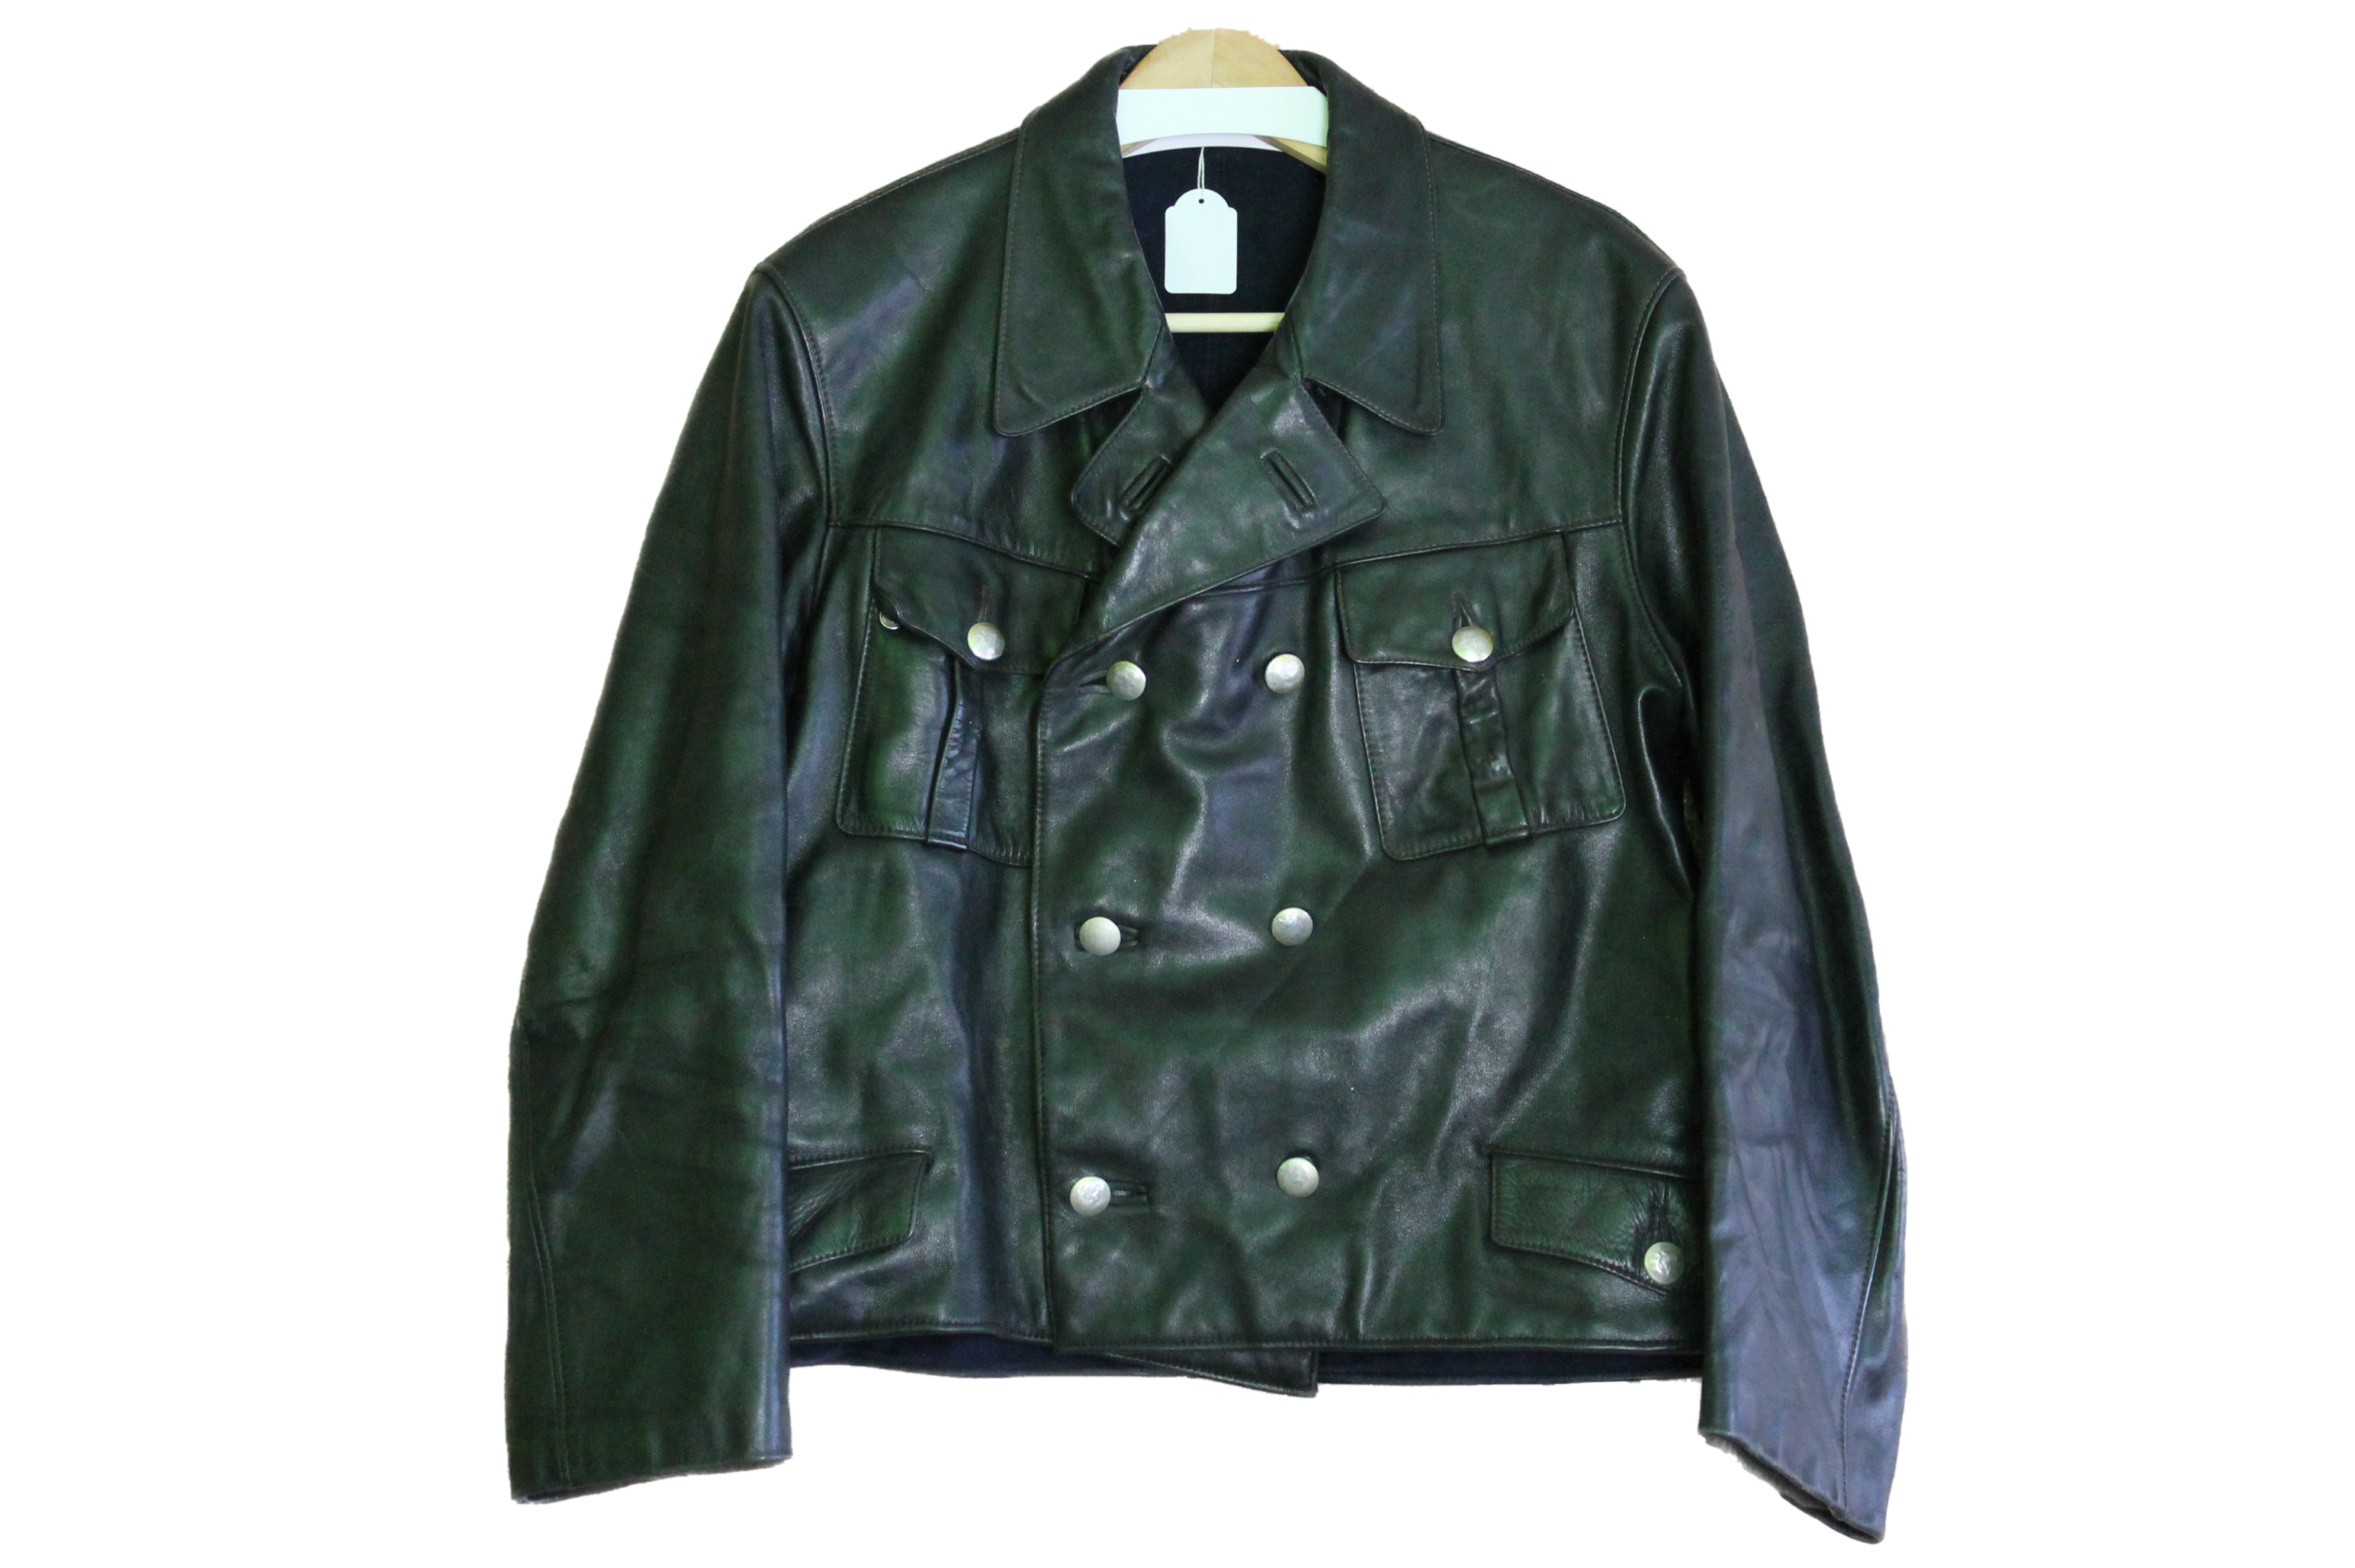 heavy leather jacket size l